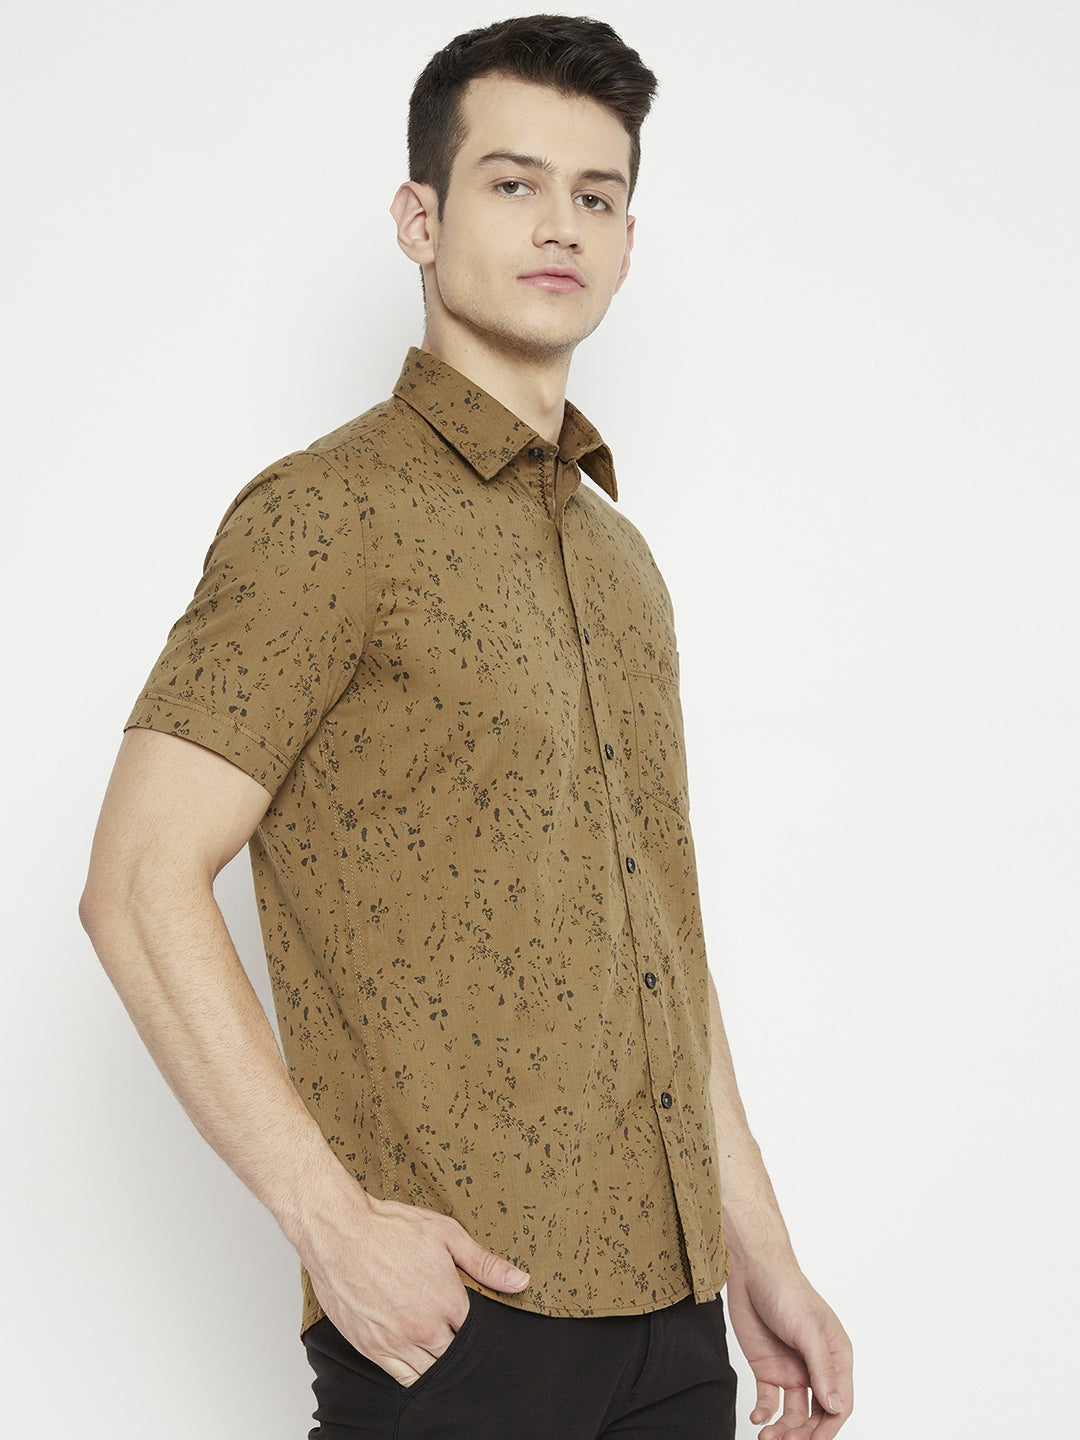 Brown Printed Slim Fit shirt - Men Shirts